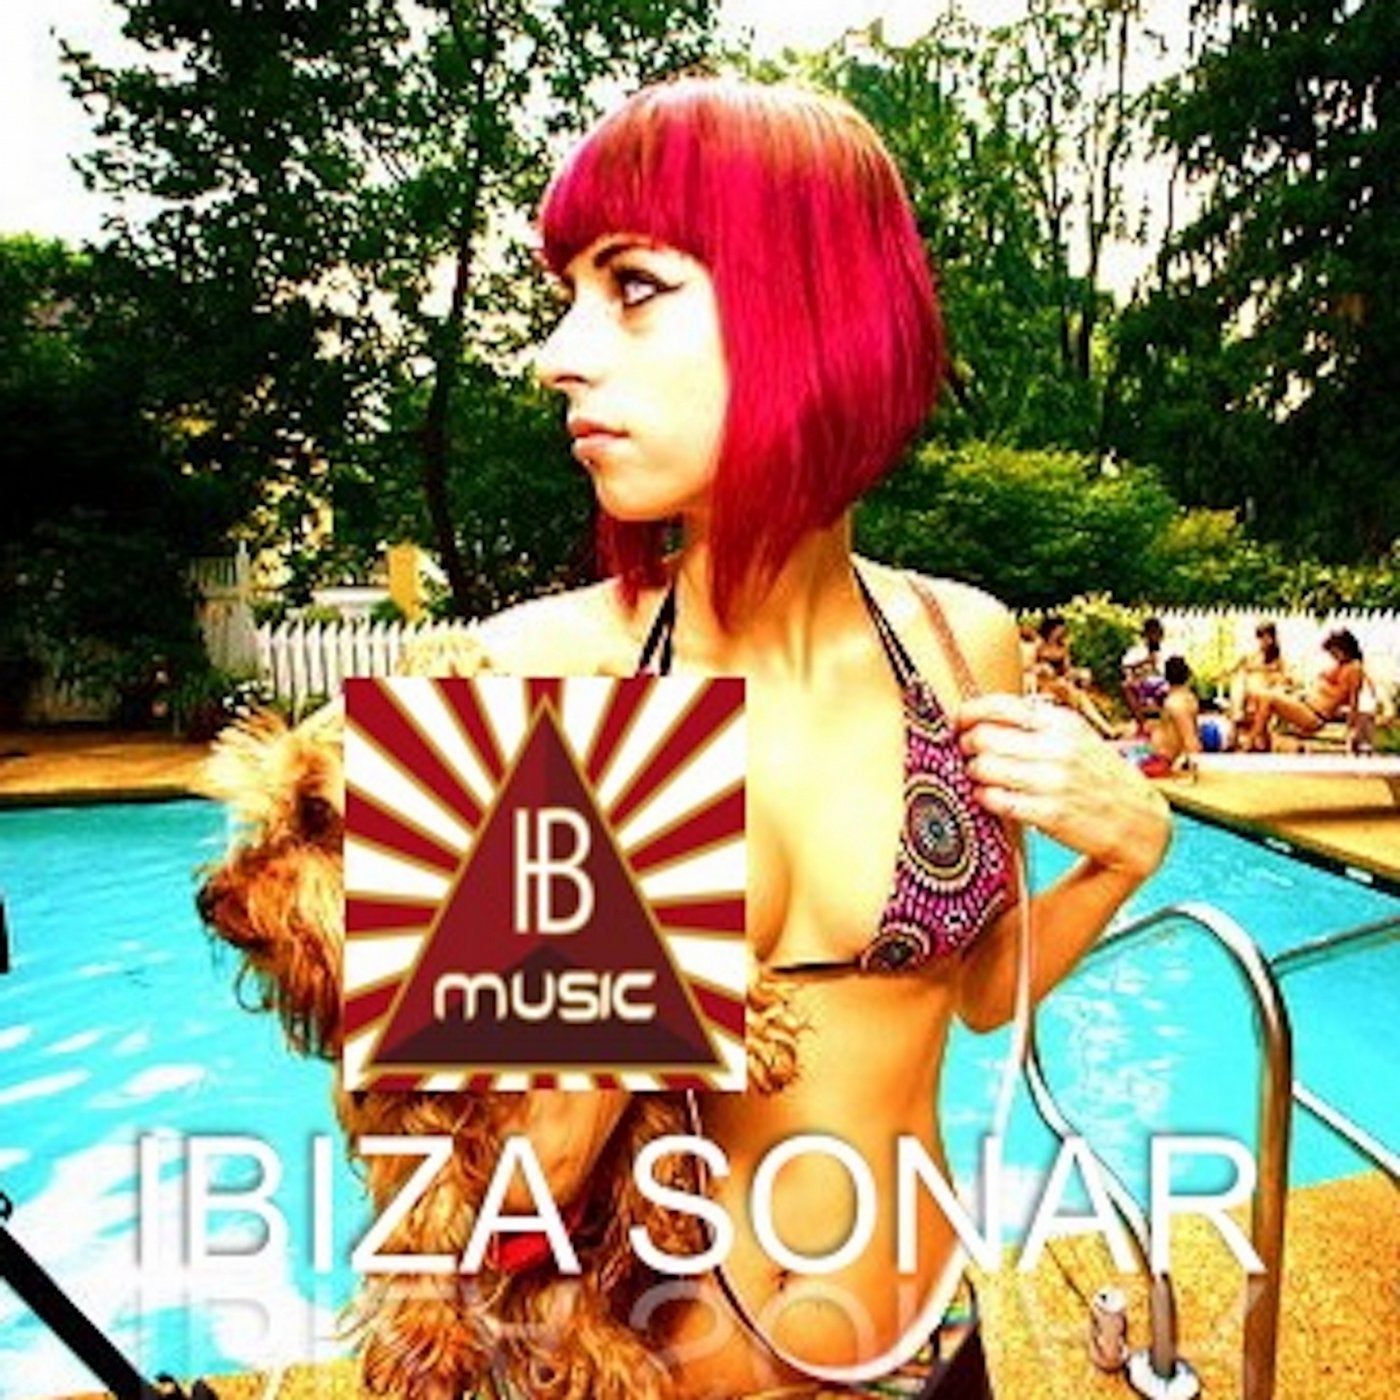 Ibiza Sonar (IB music iBiZA)